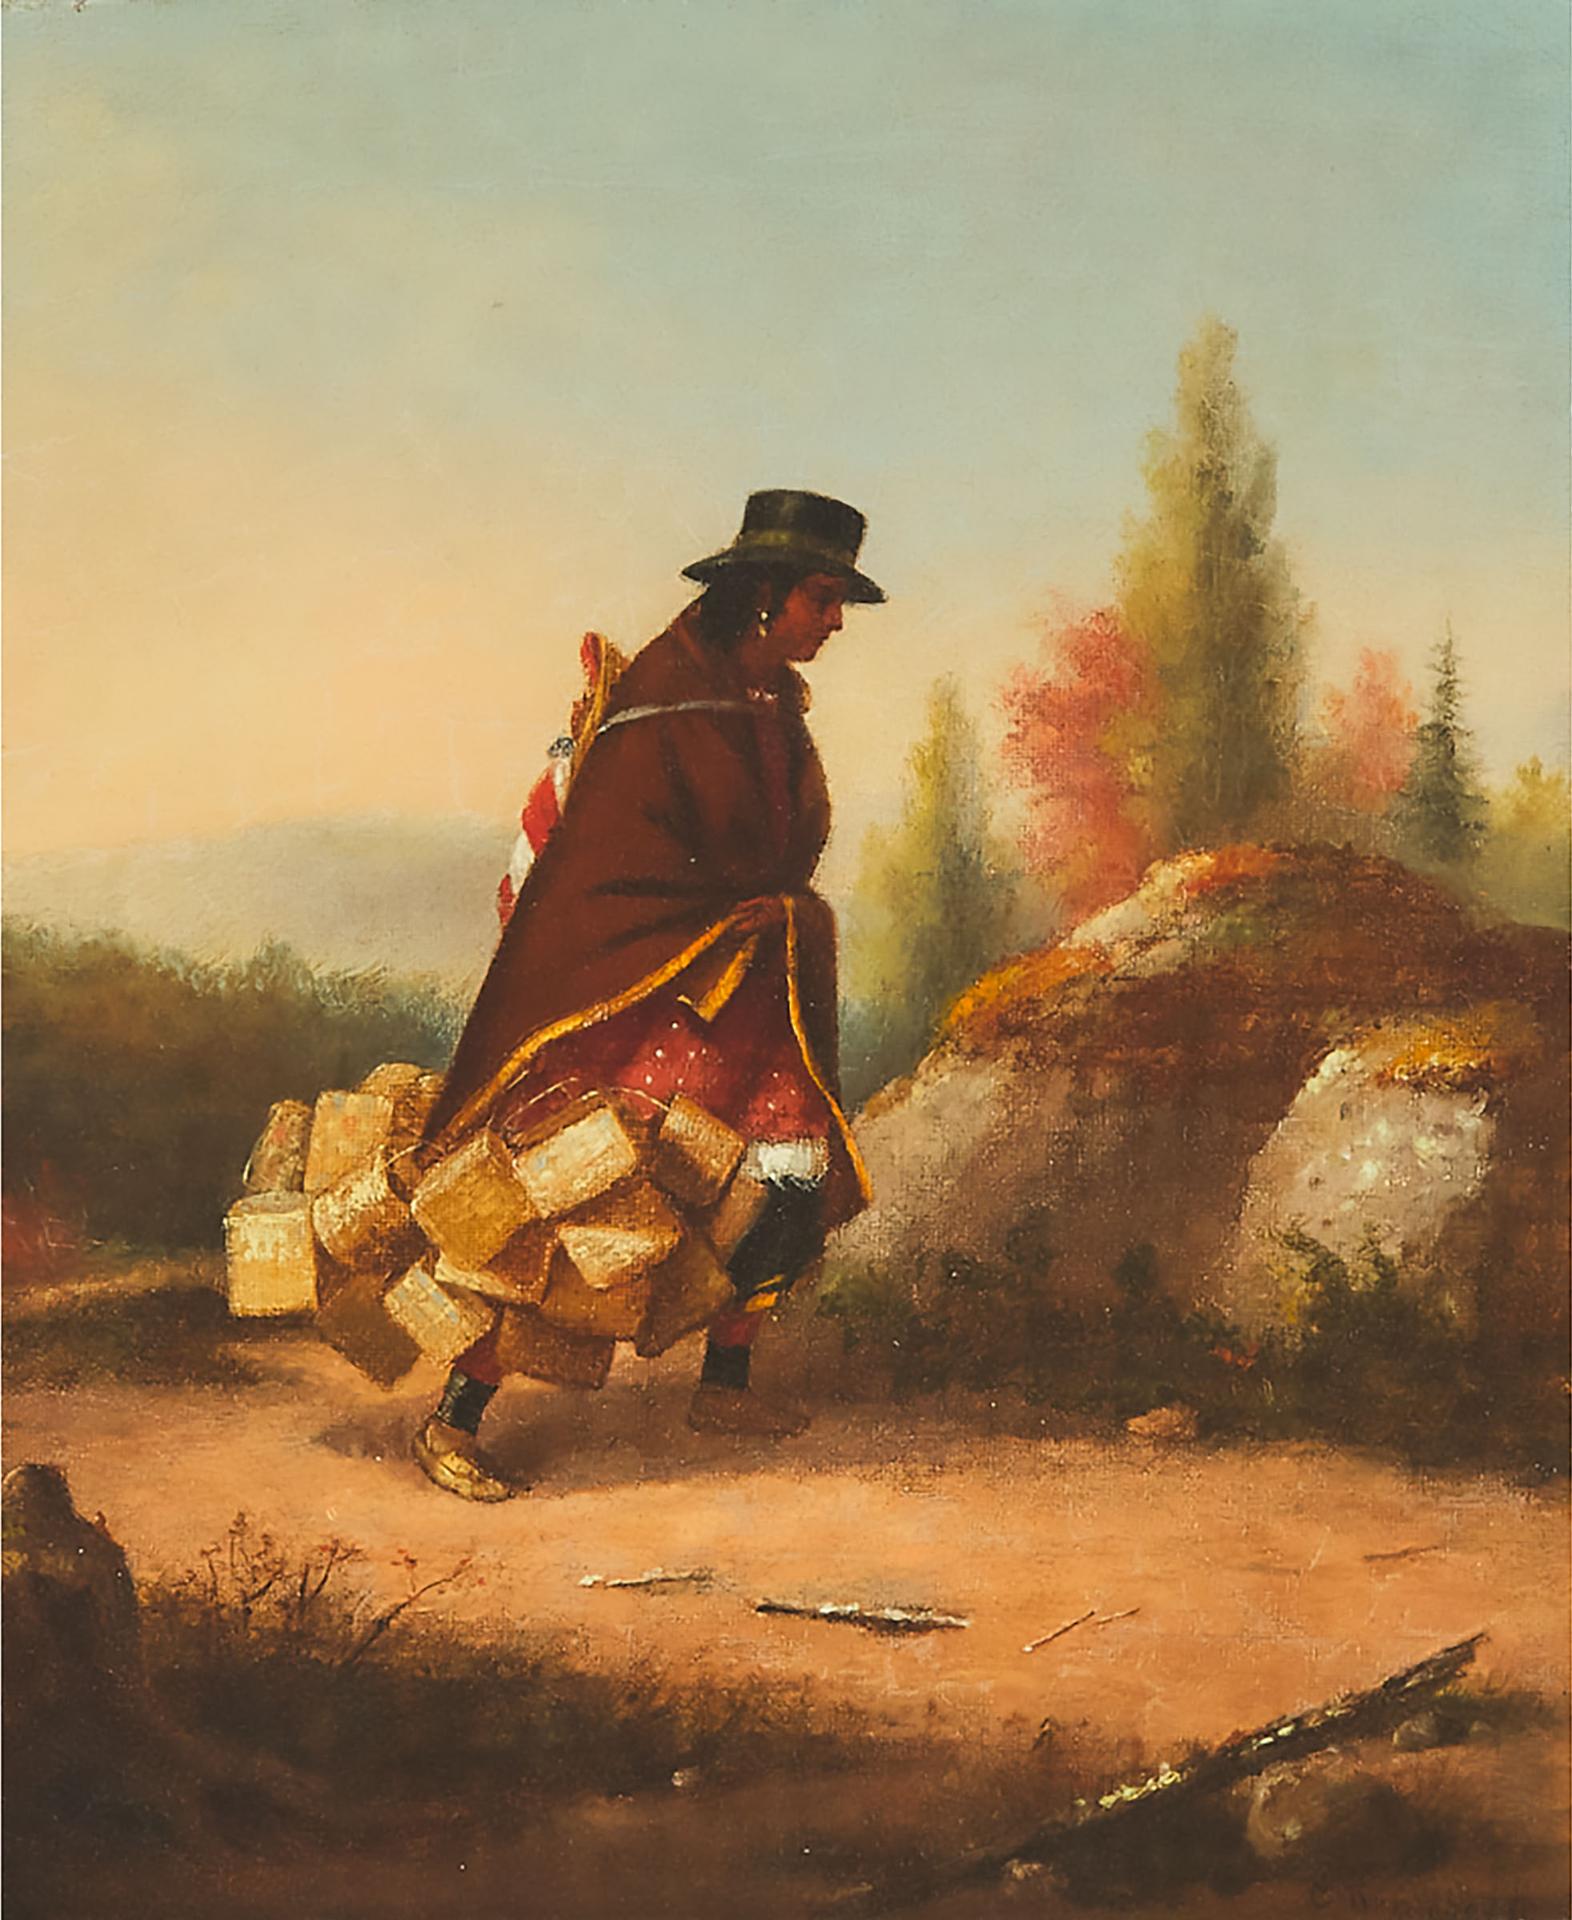 Cornelius David Krieghoff (1815-1872) - The Basket Seller